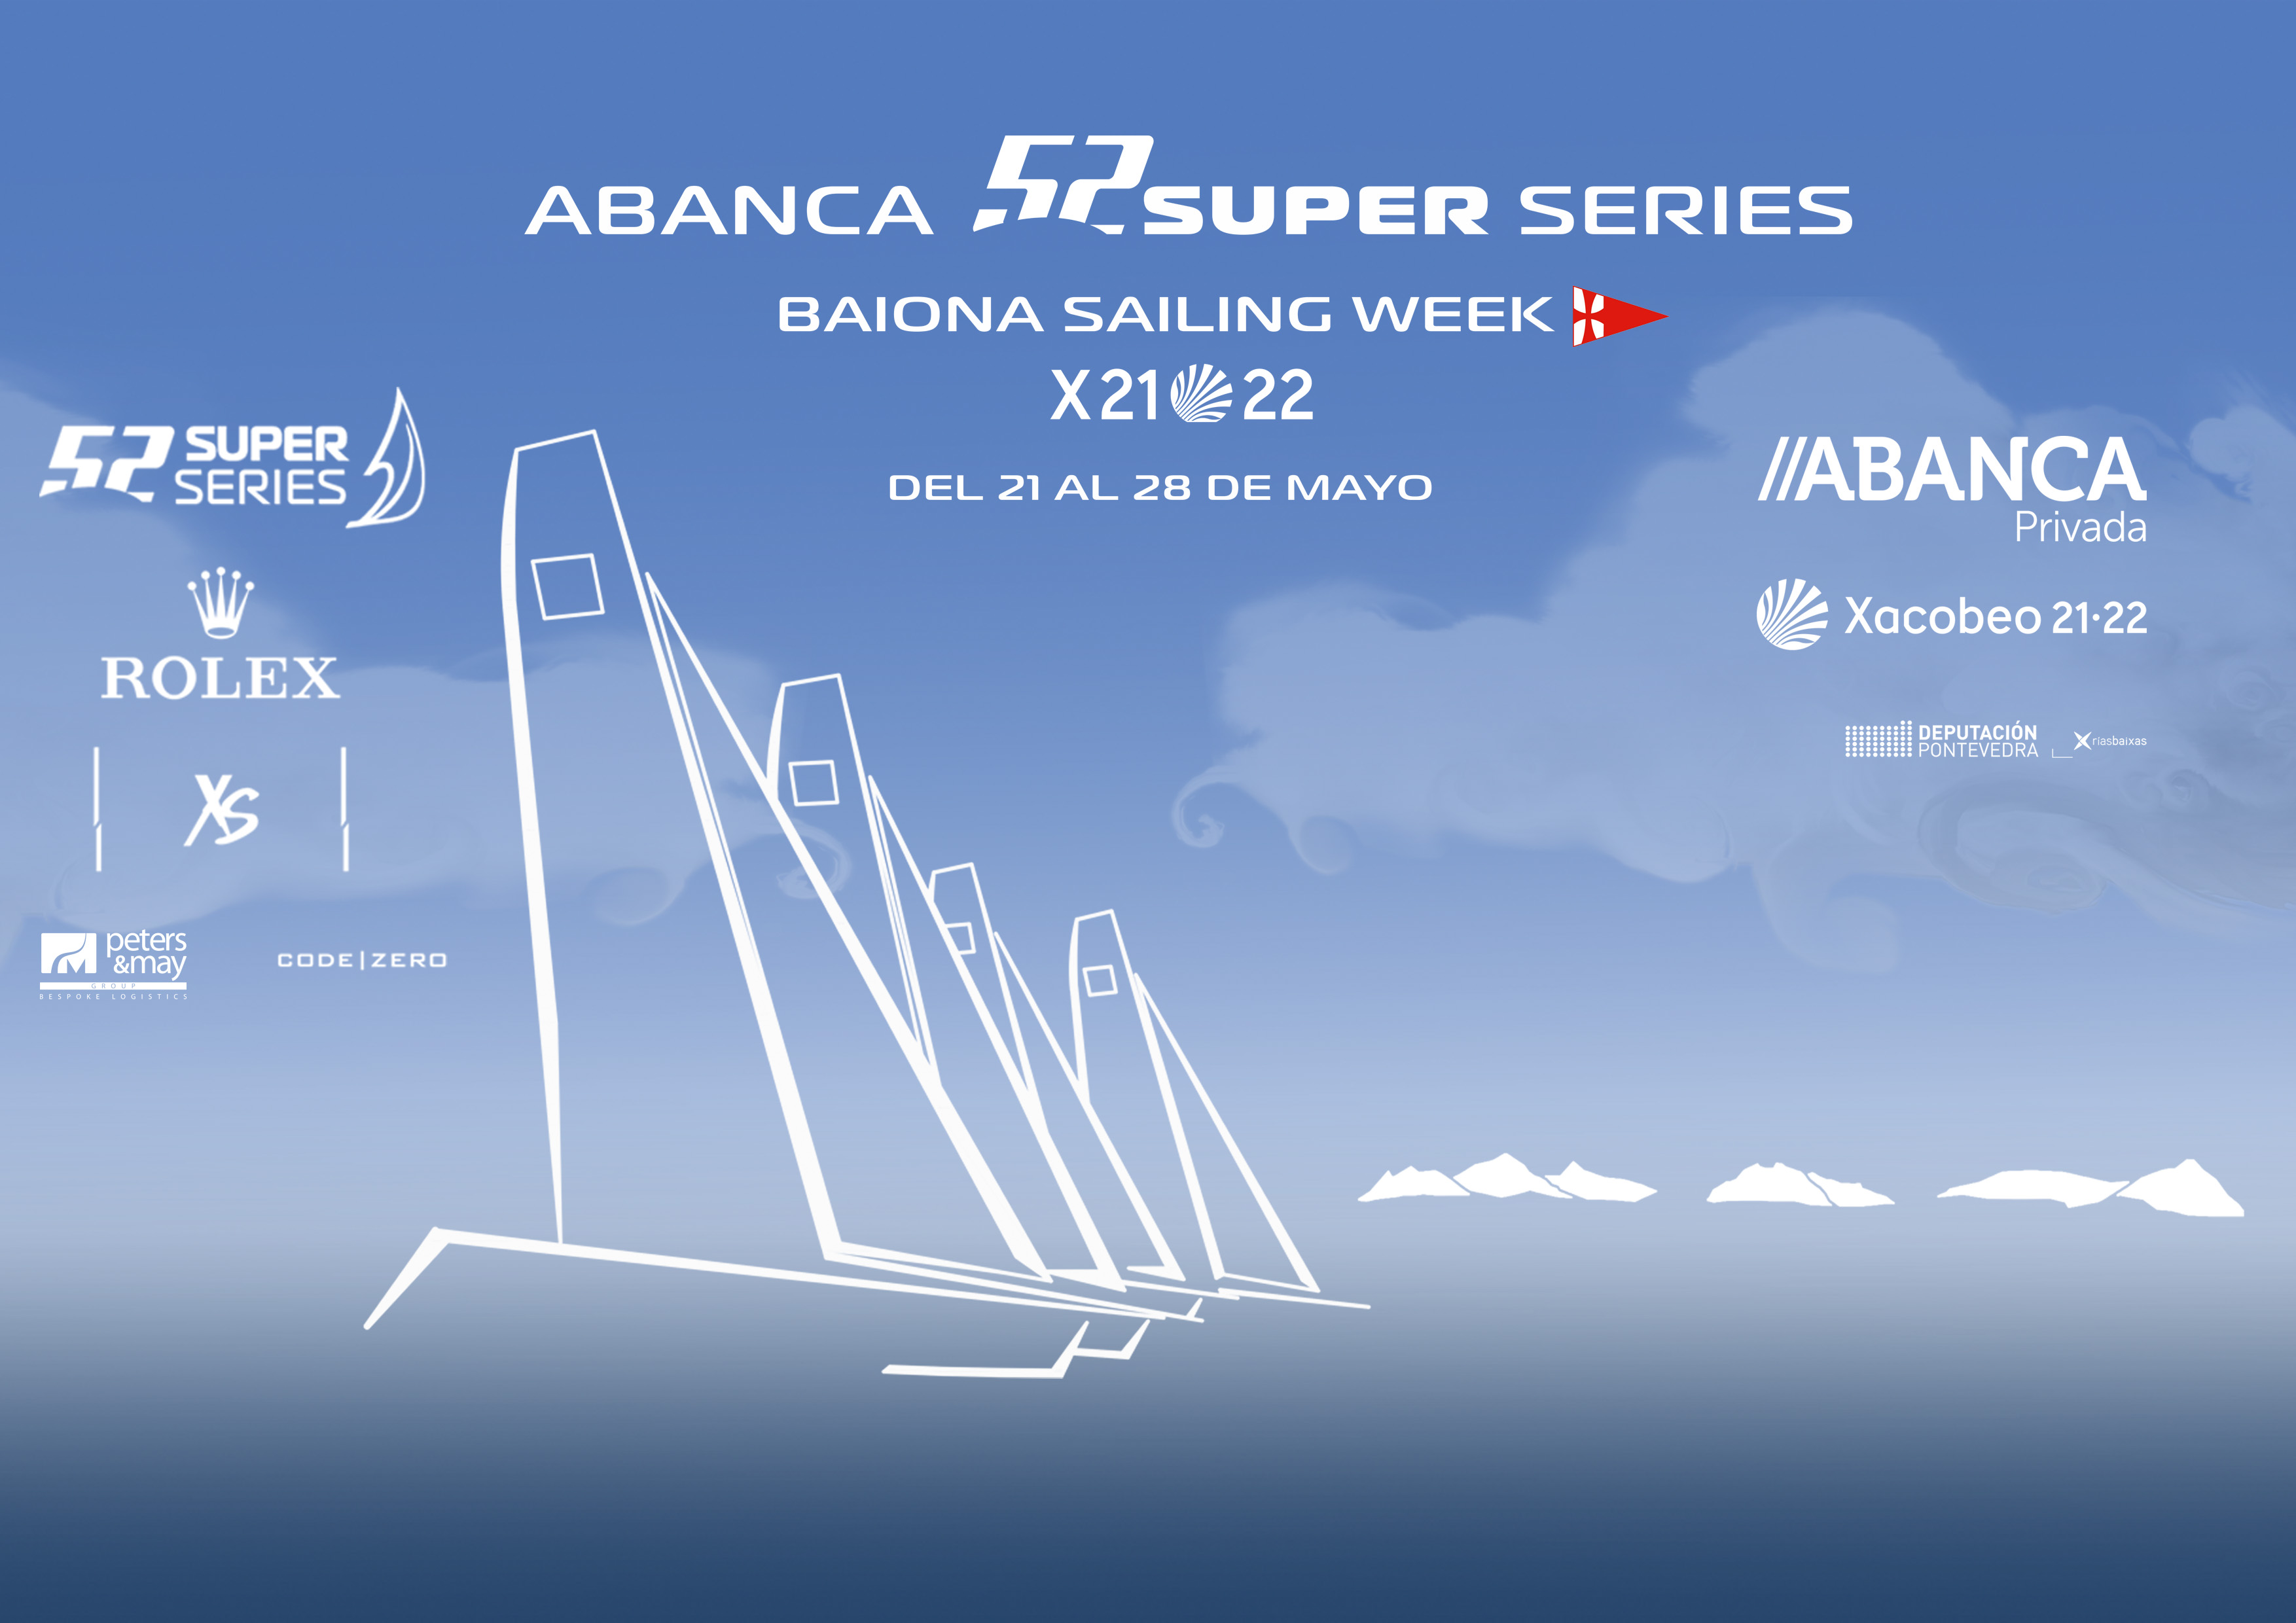 ABANCA 52 SUPER SERIES BAIONA SAILING WEEK · Monte Real Club de Yates Baiona